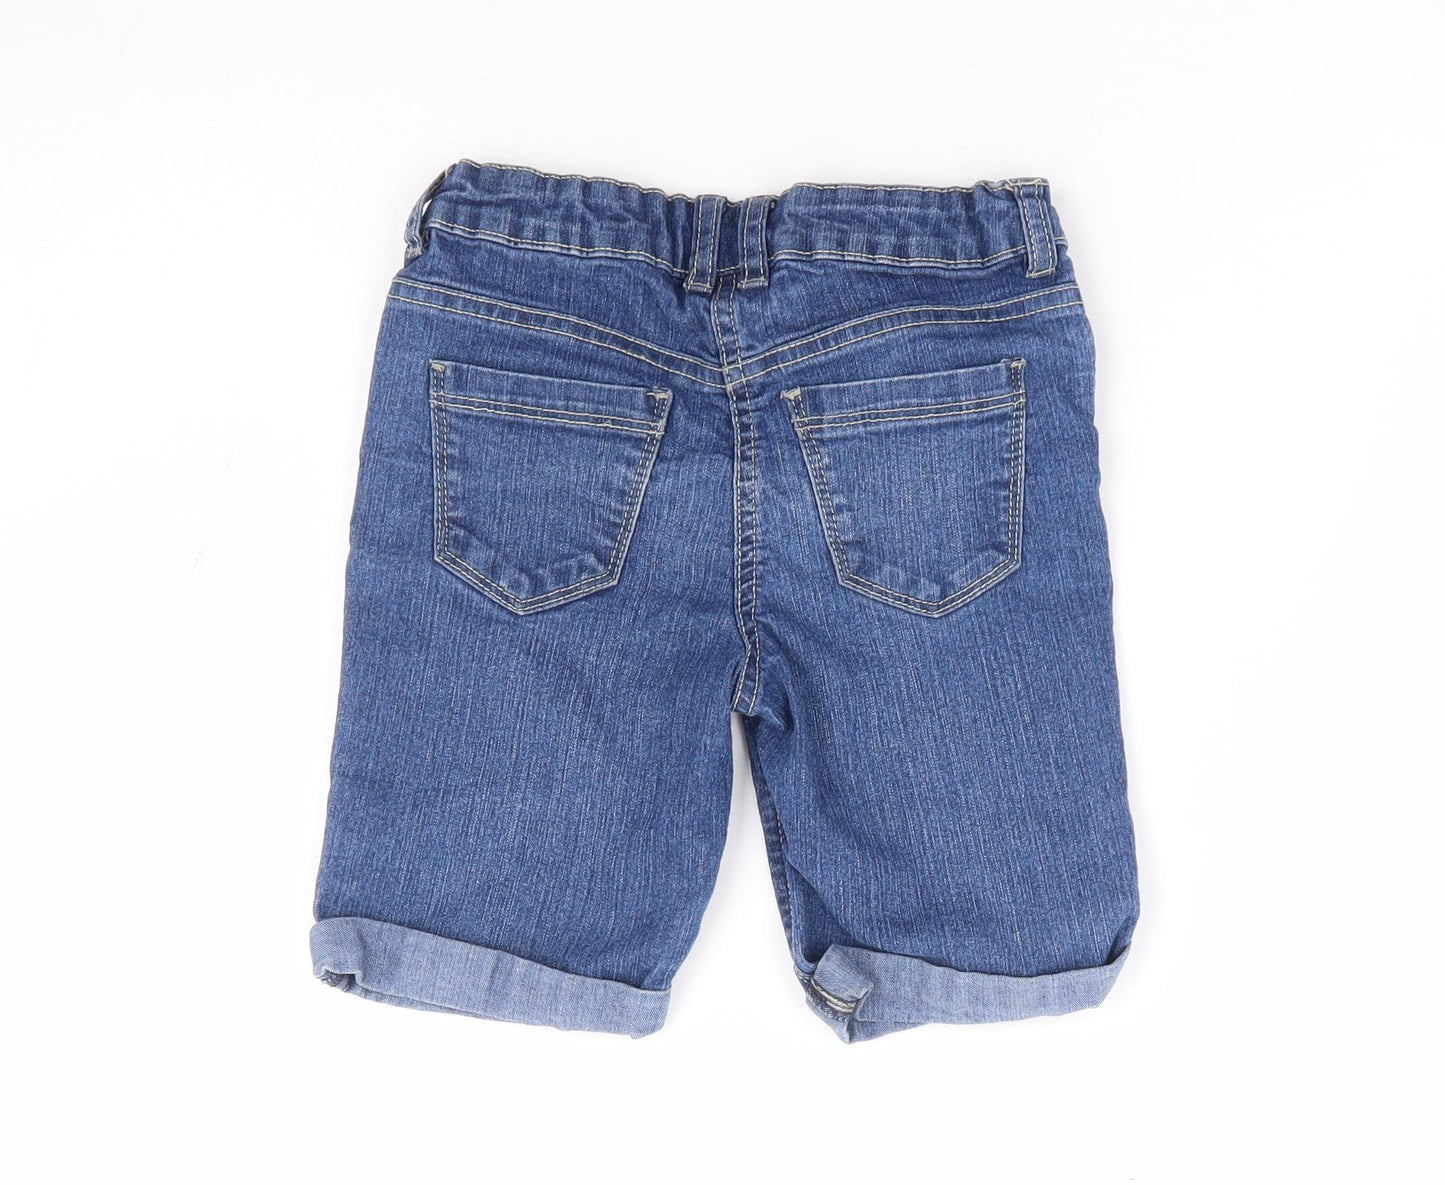 Matalan Boys Blue Cotton Cargo Shorts Size 6-7 Years Regular Zip